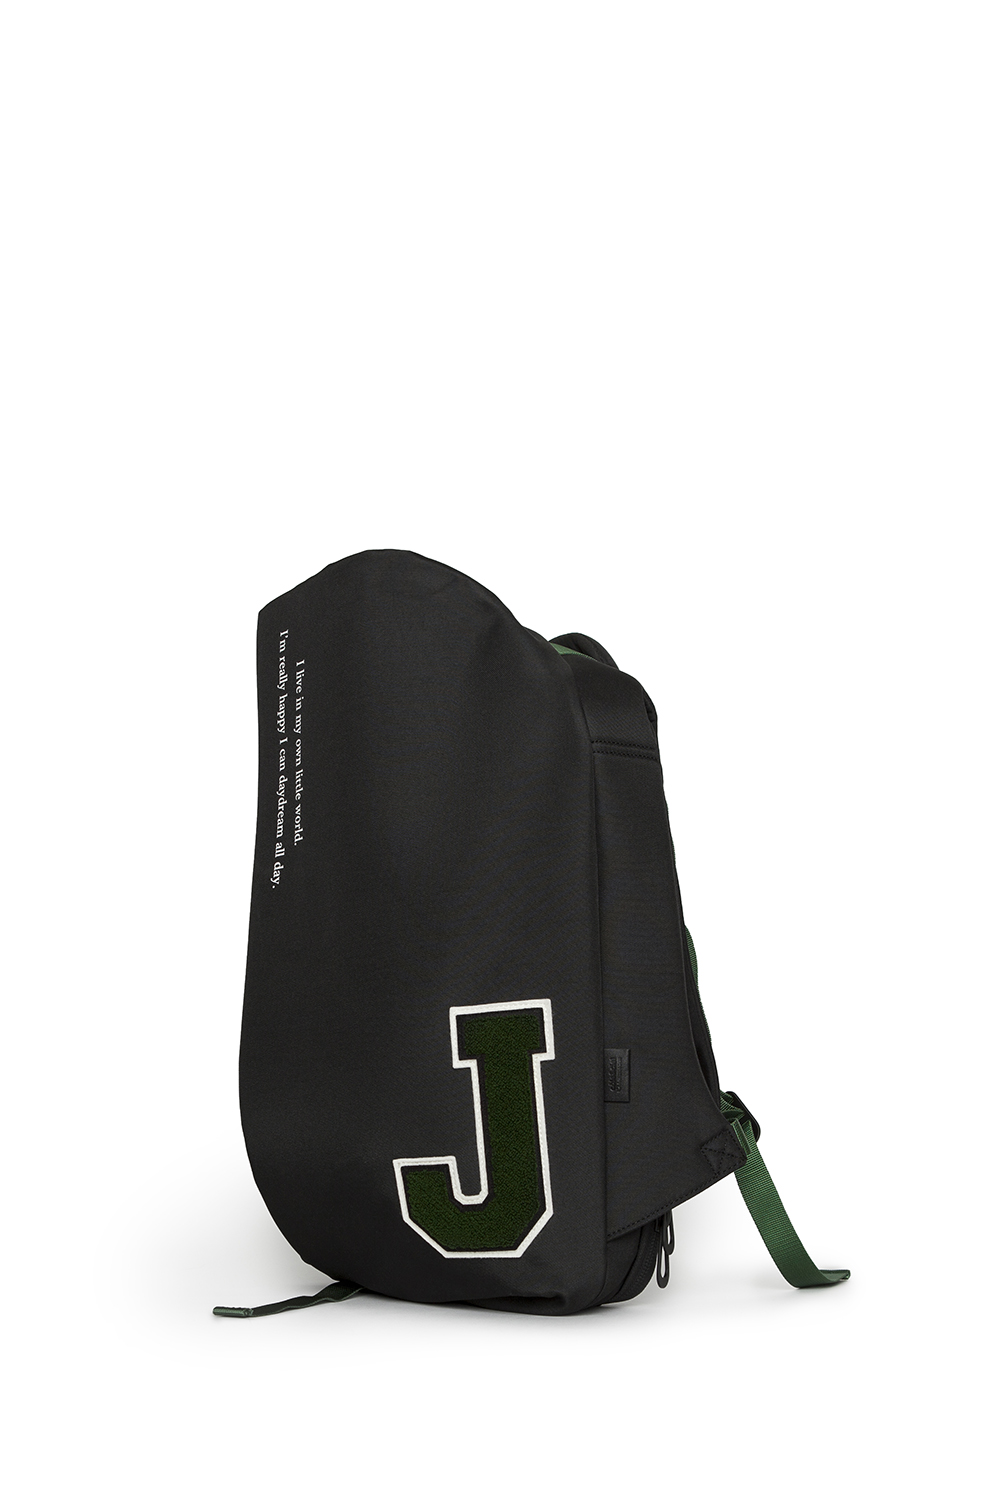 JohnUNDERCOVER × Cote&Cielのコラボレーションバッグ